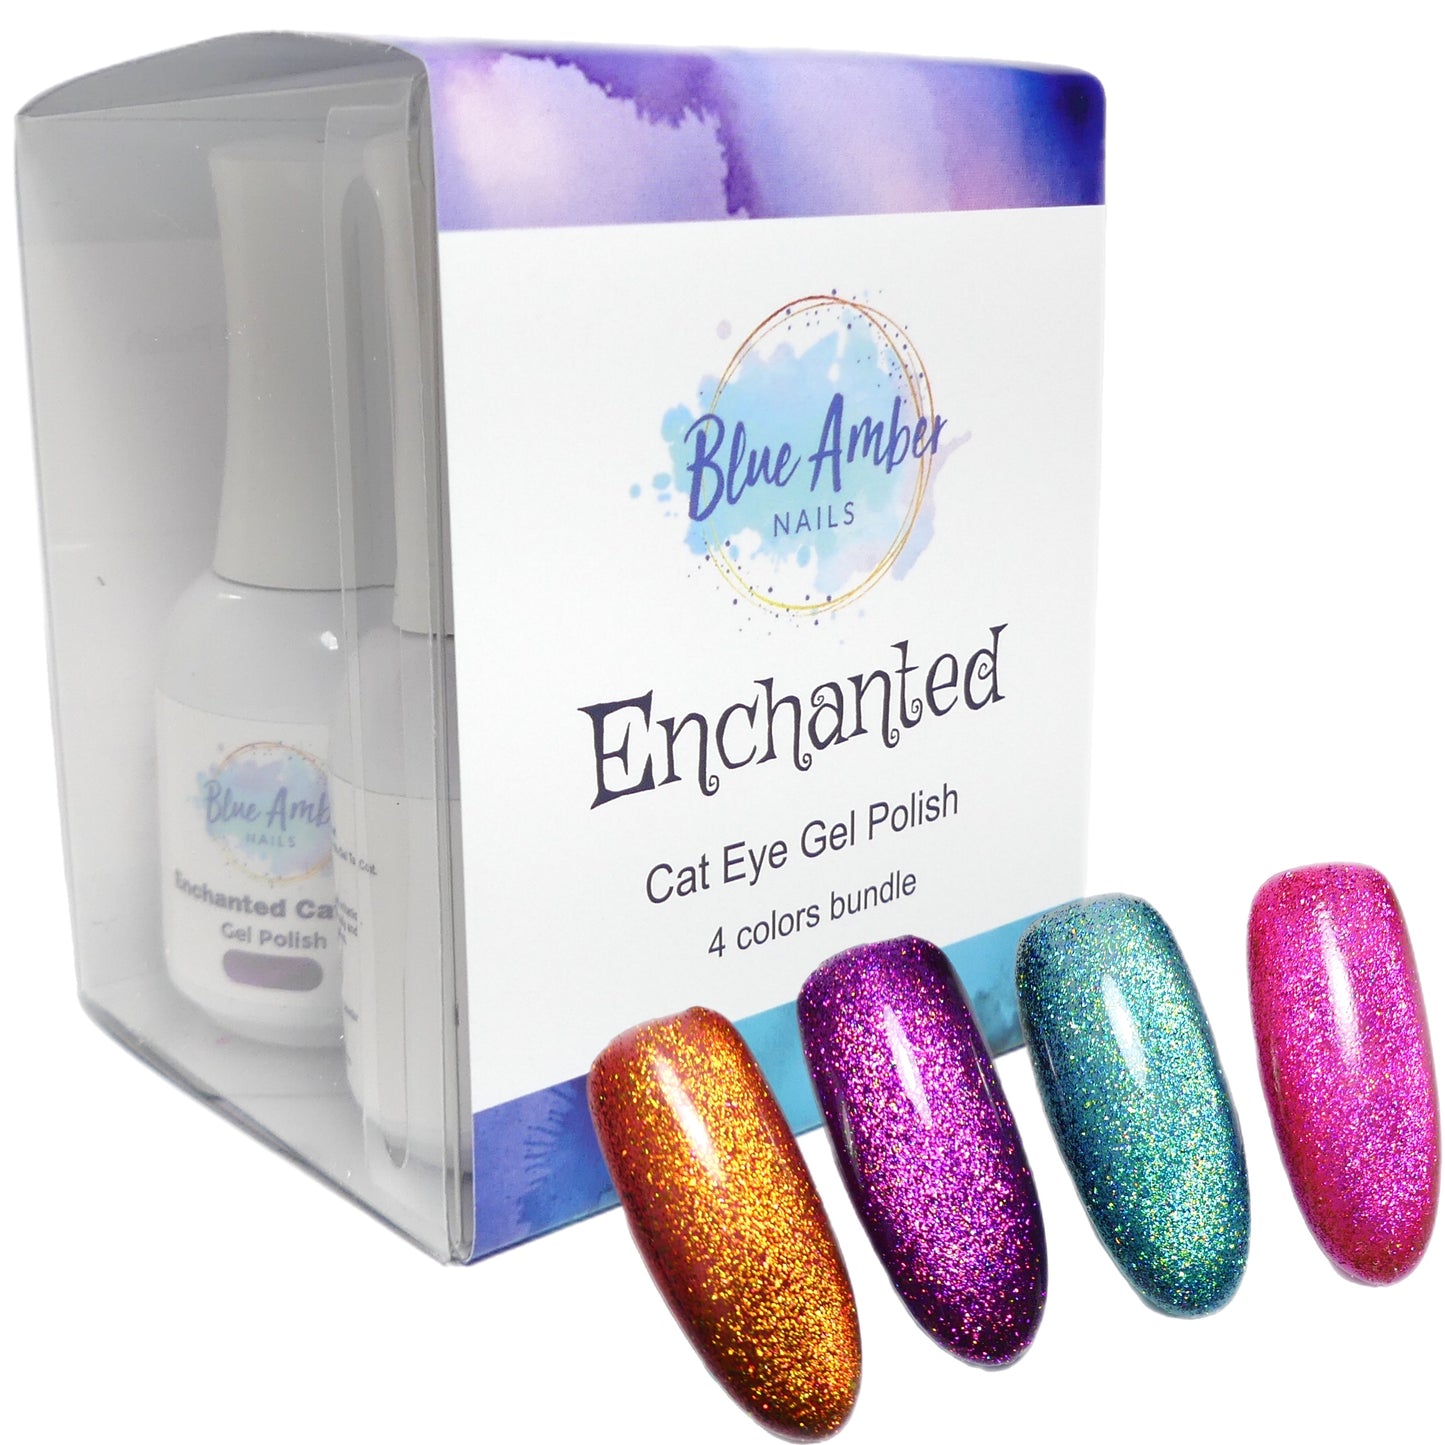 Enchanted Cat Eye Bundle - 4 Magnetic Gel Polishes